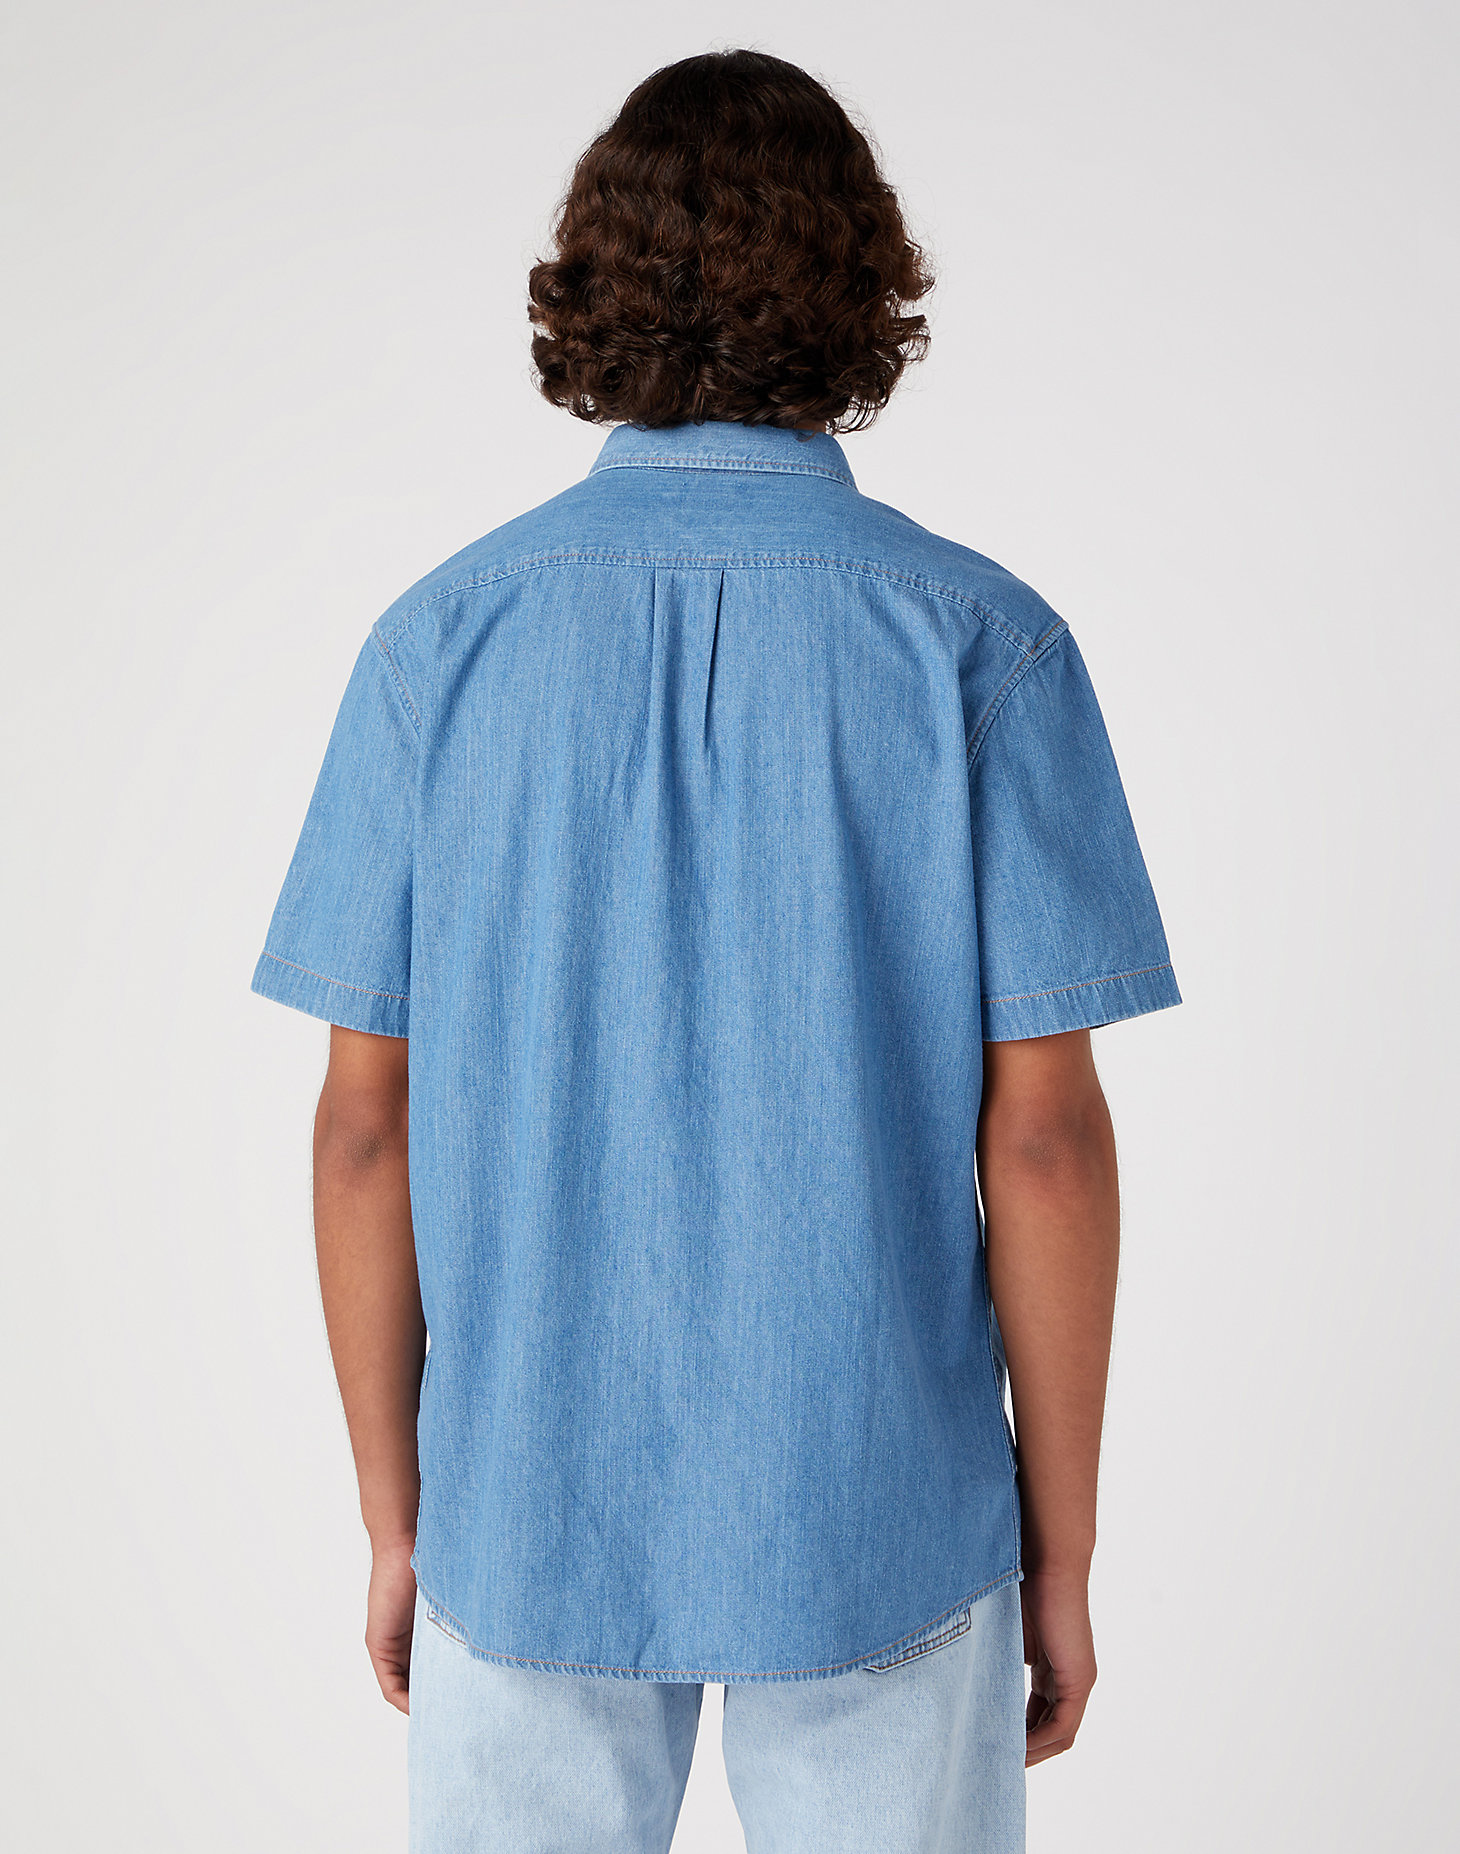 Short Sleeve 1 Pocket Shirt in Light Stone alternative view 2